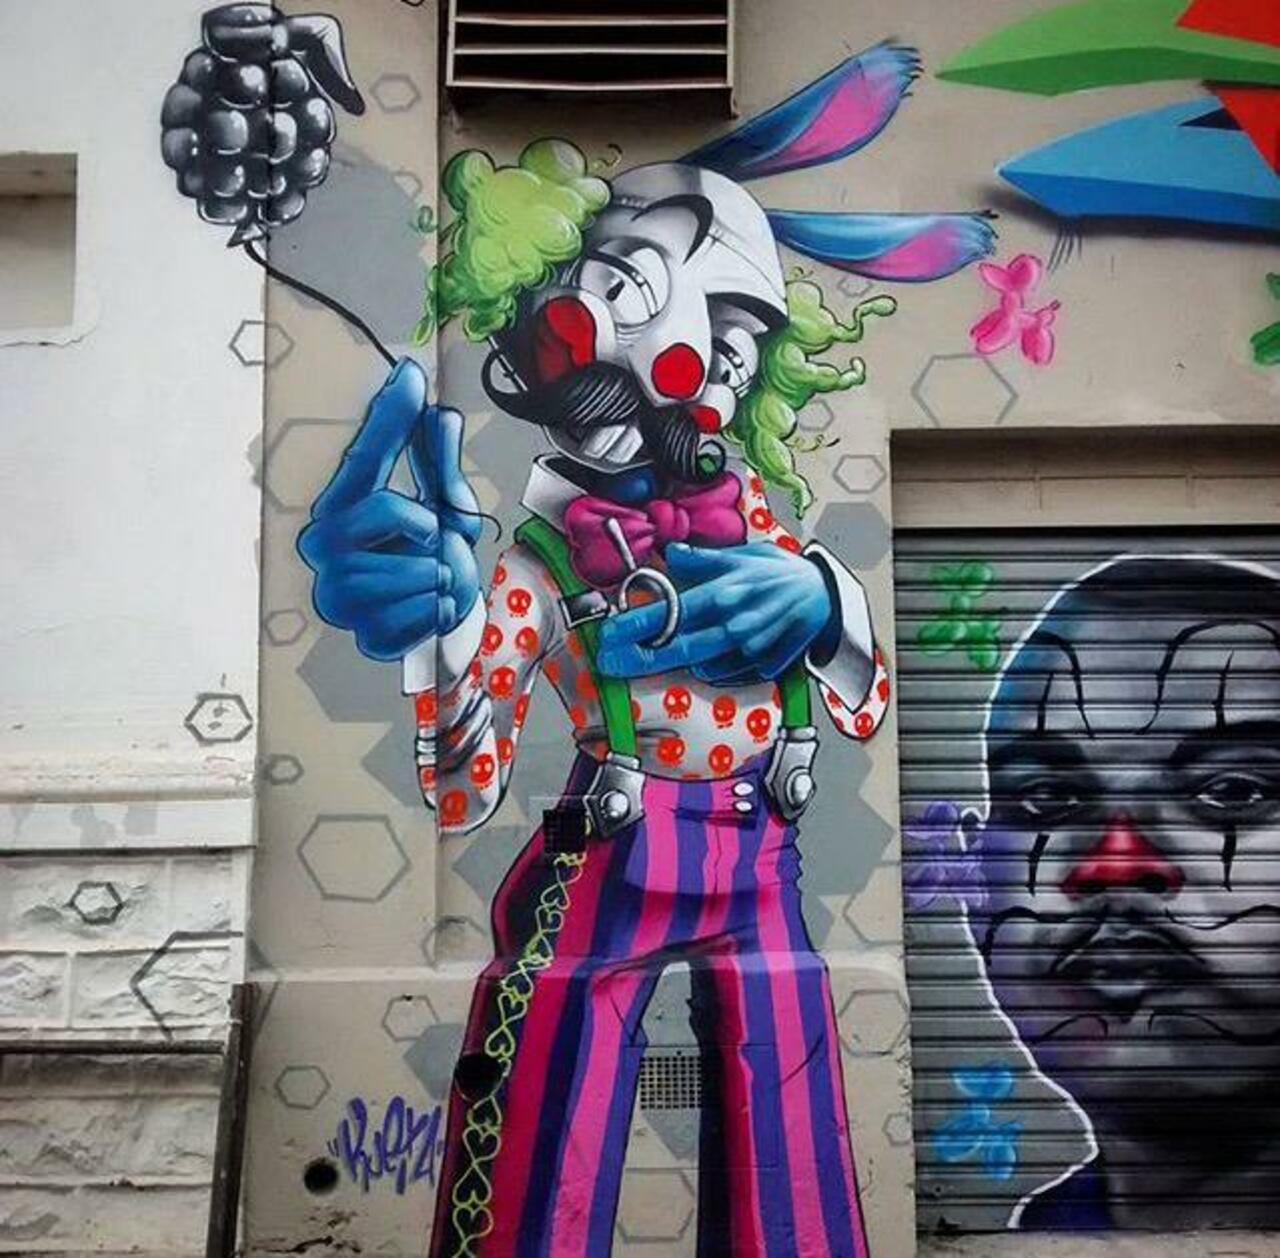 New Street Art by Karen Kueia 

#art #graffiti #mural #streetart http://t.co/6rDsBaCgOG